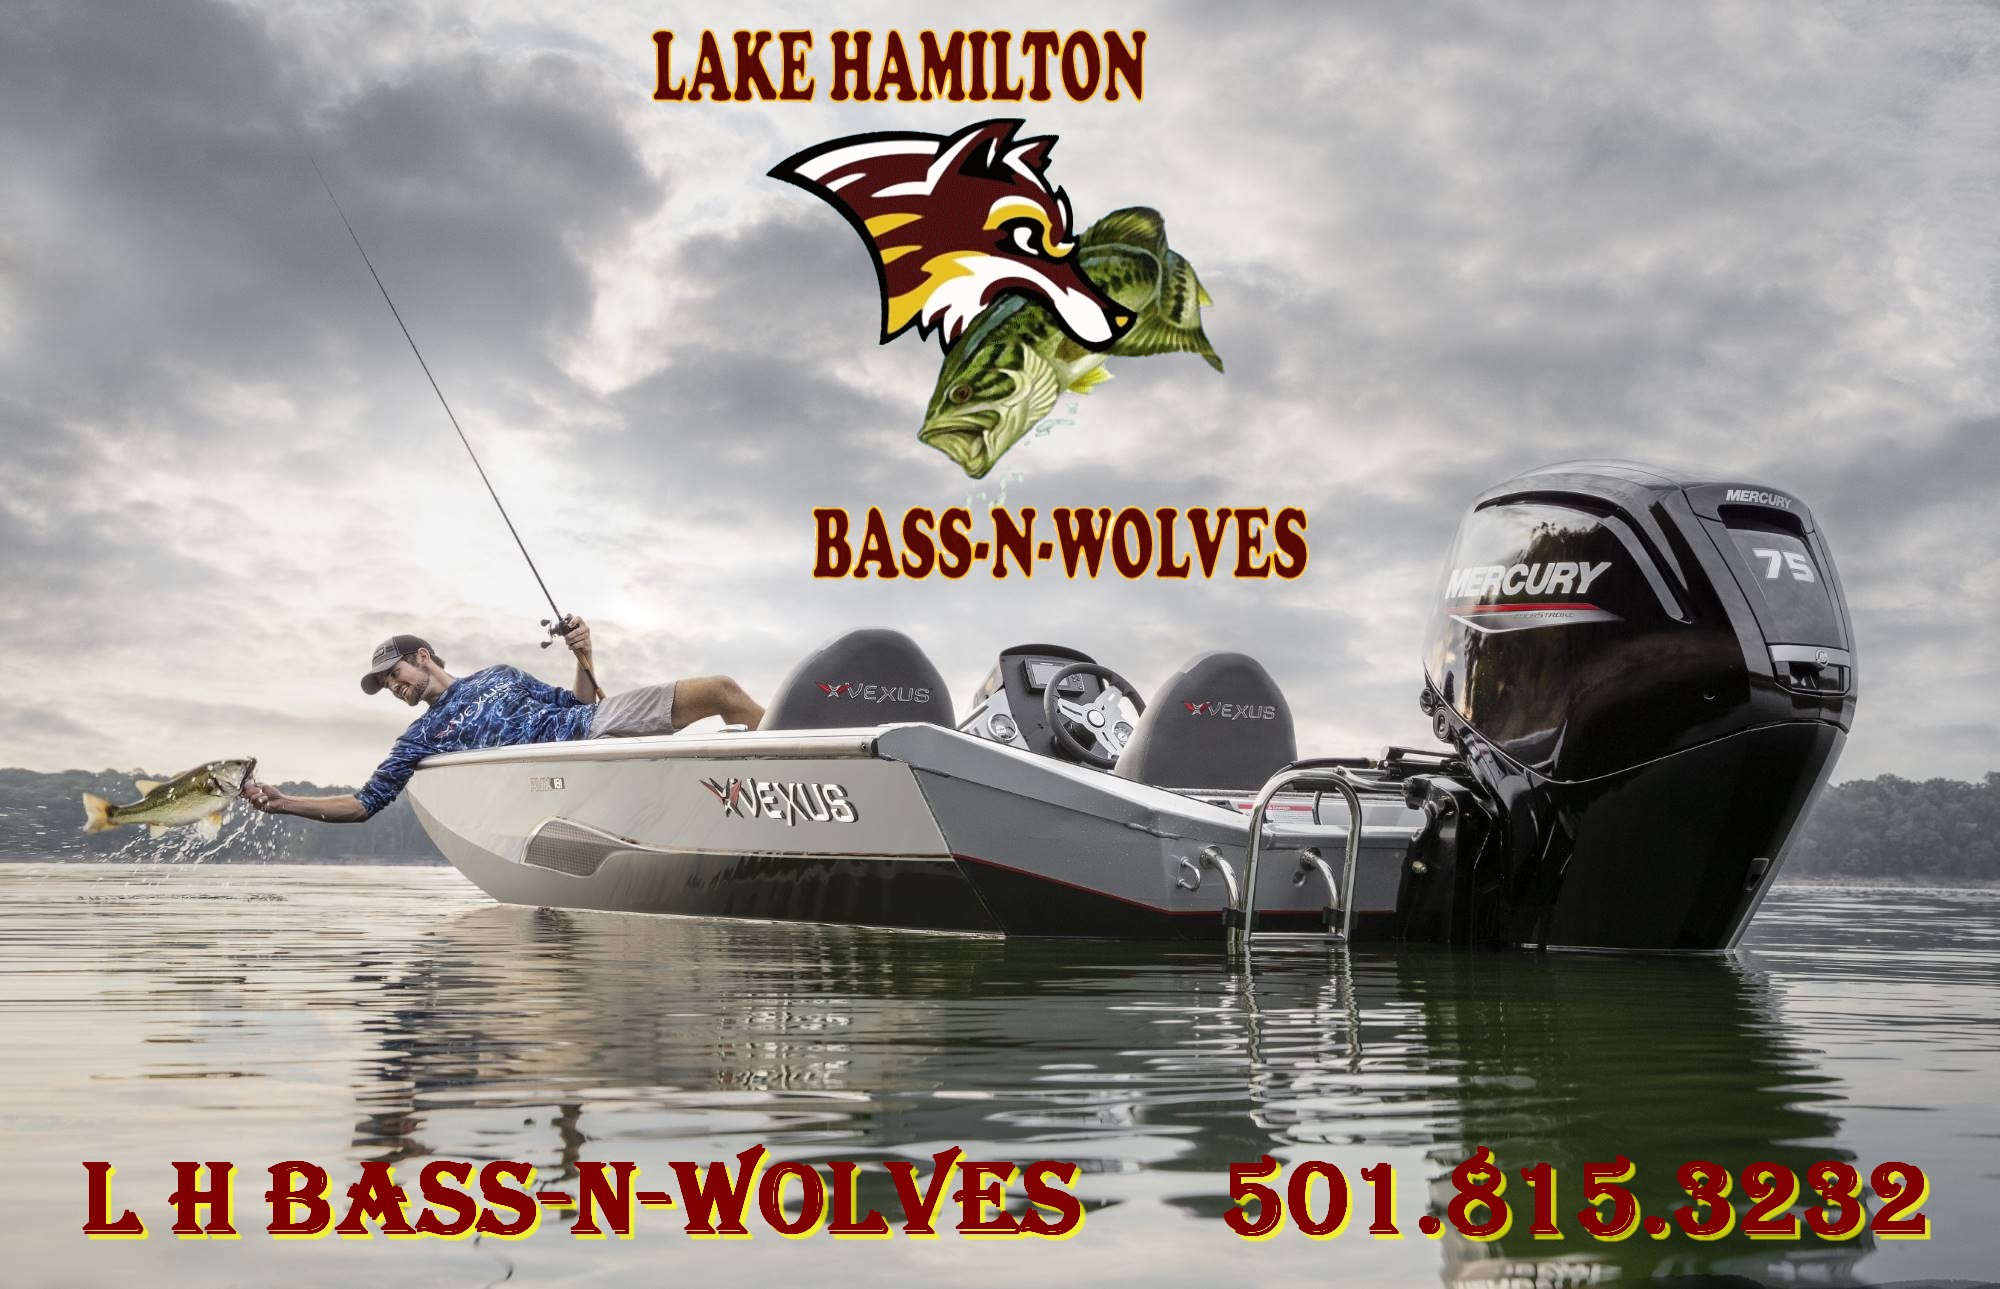 logo for Vexus boats and Mercury motors, sponsor for lake hamilton school fishing team